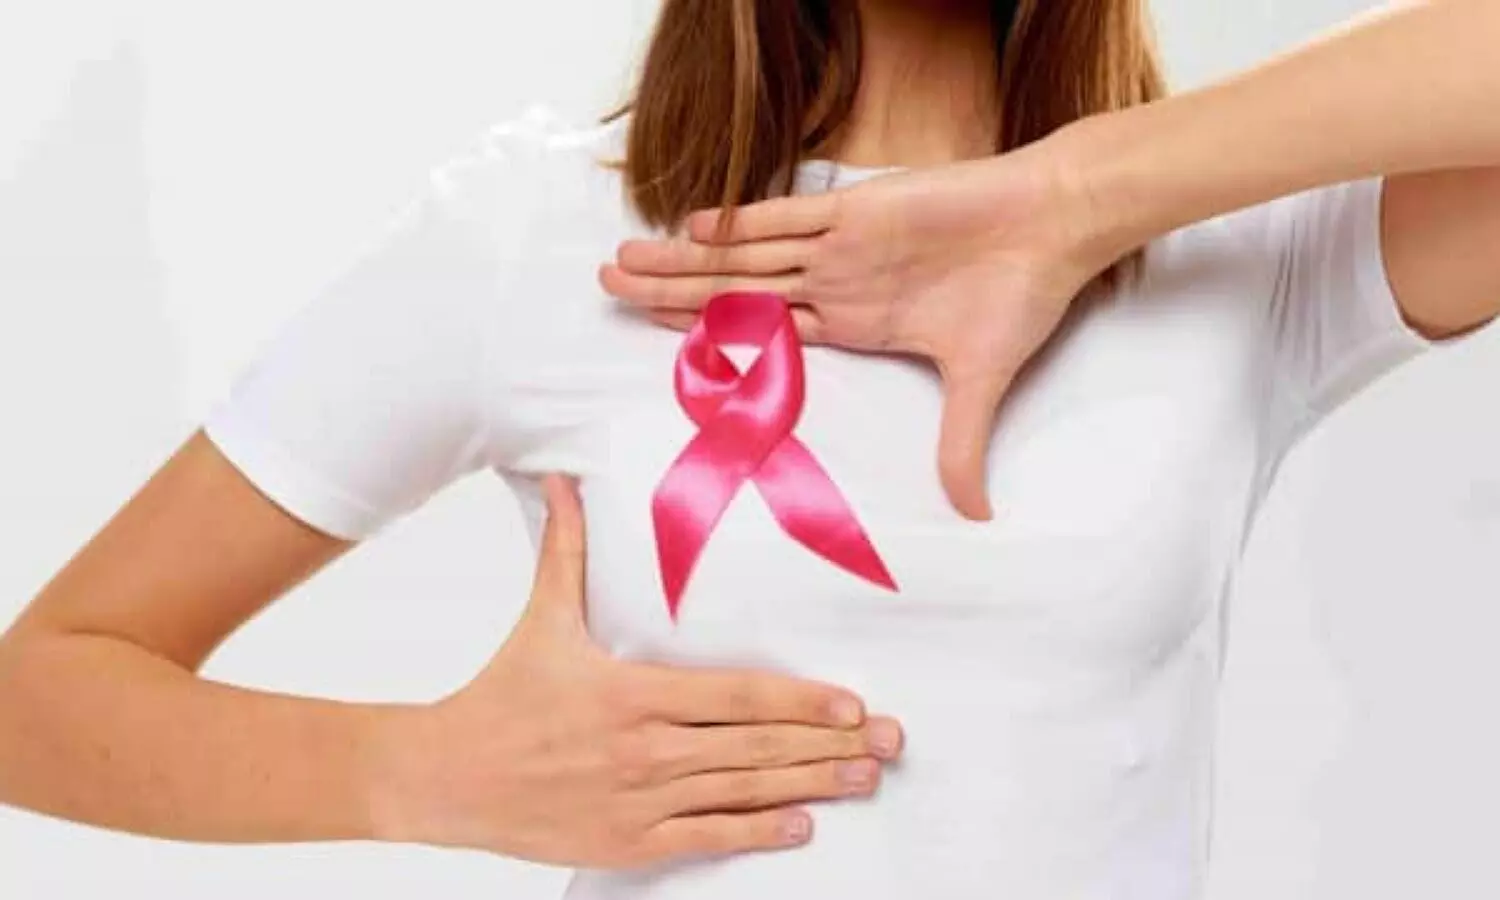 Breast Cancer symptoms